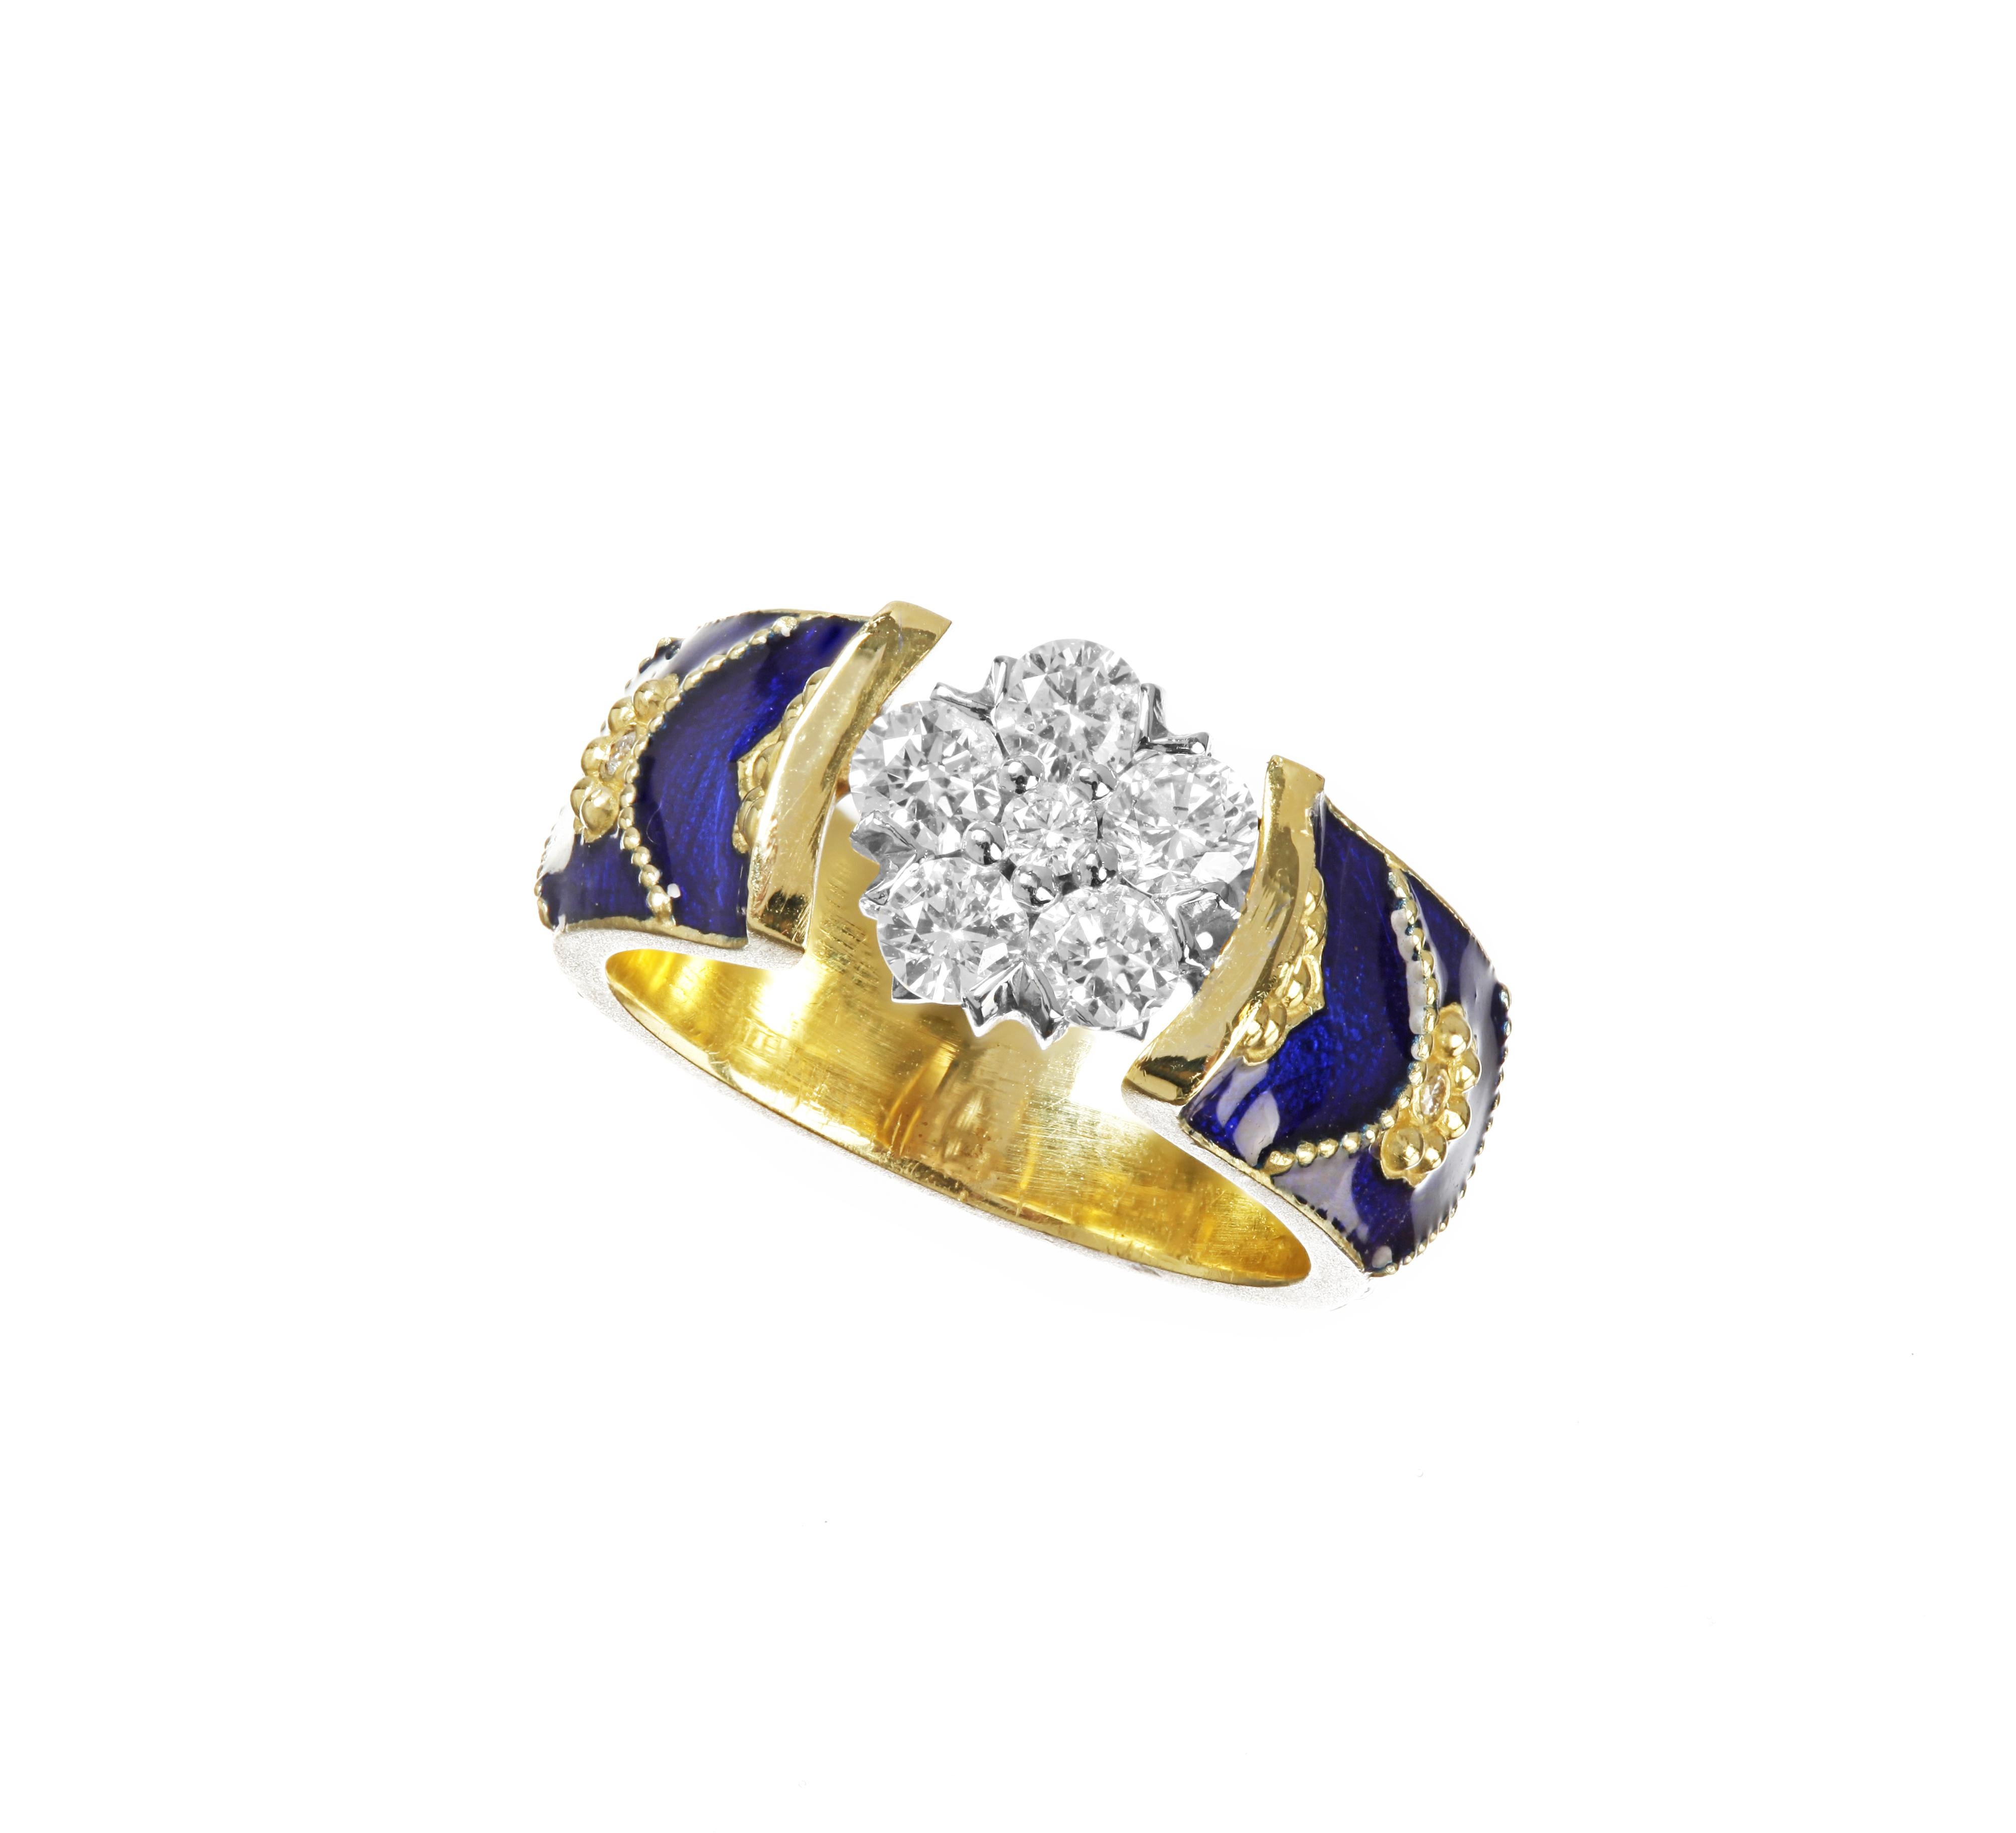 Stambolian 18K Yellow Gold Cobalt Blue Enamel Diamond Cluster Ring

From the 